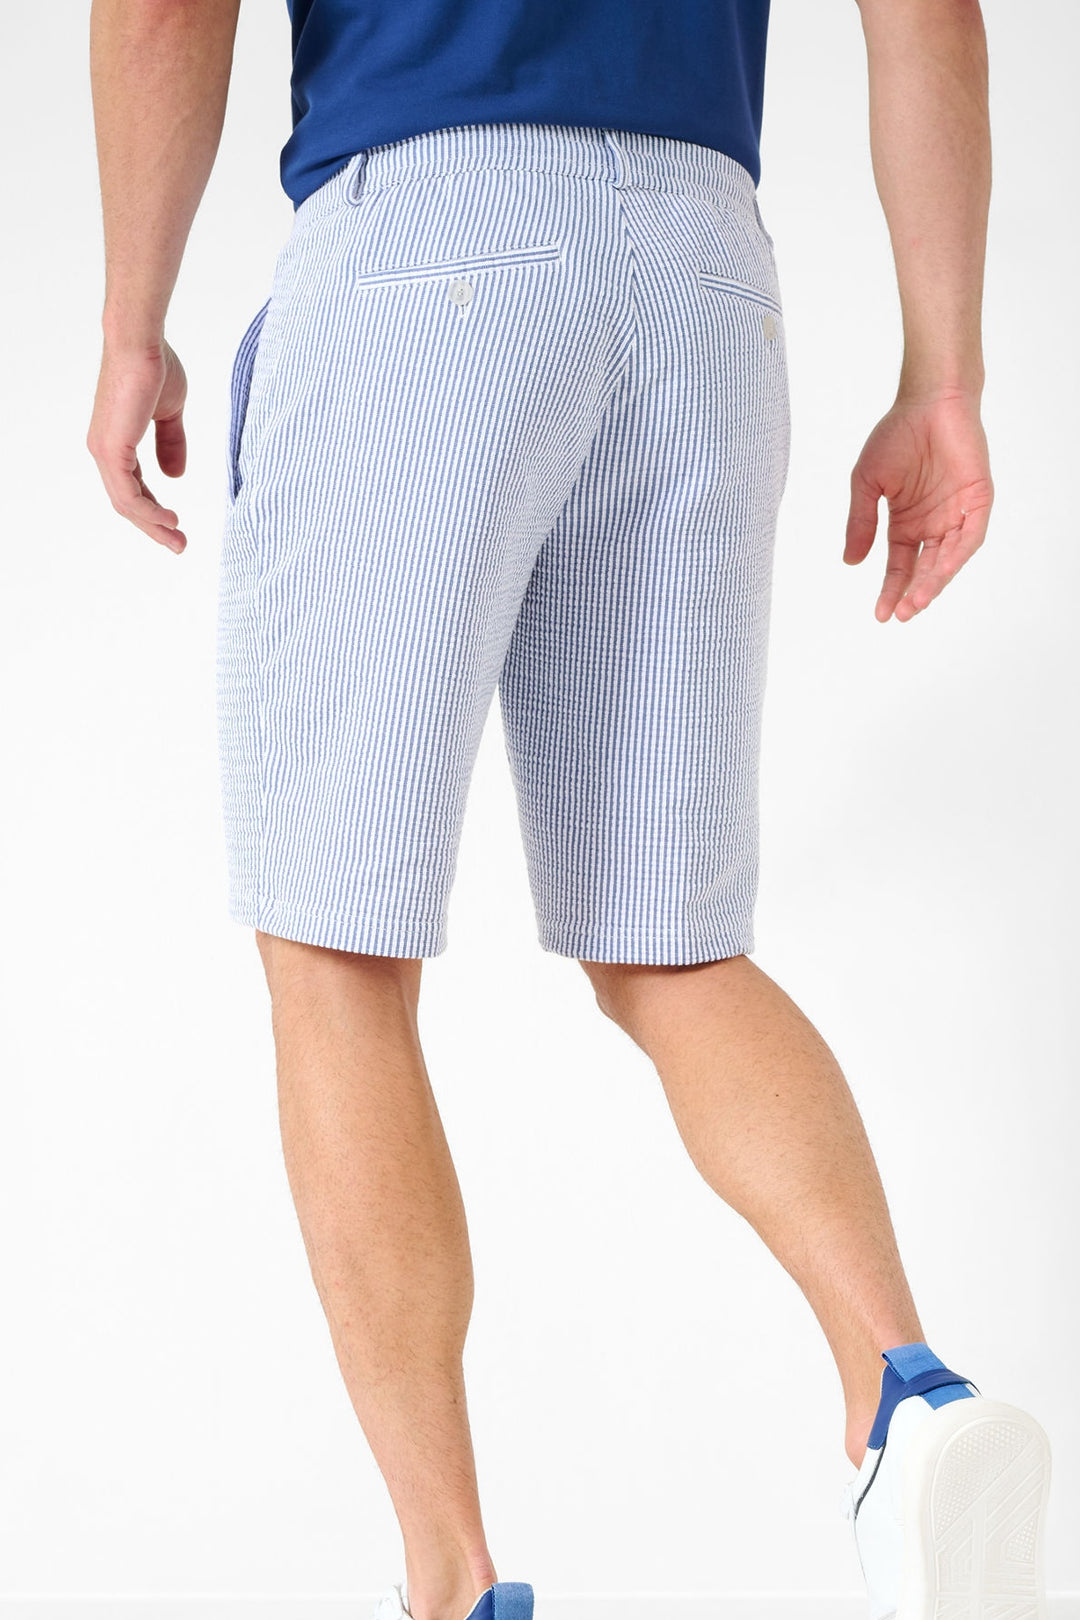 Phil lined Bermuda shorts